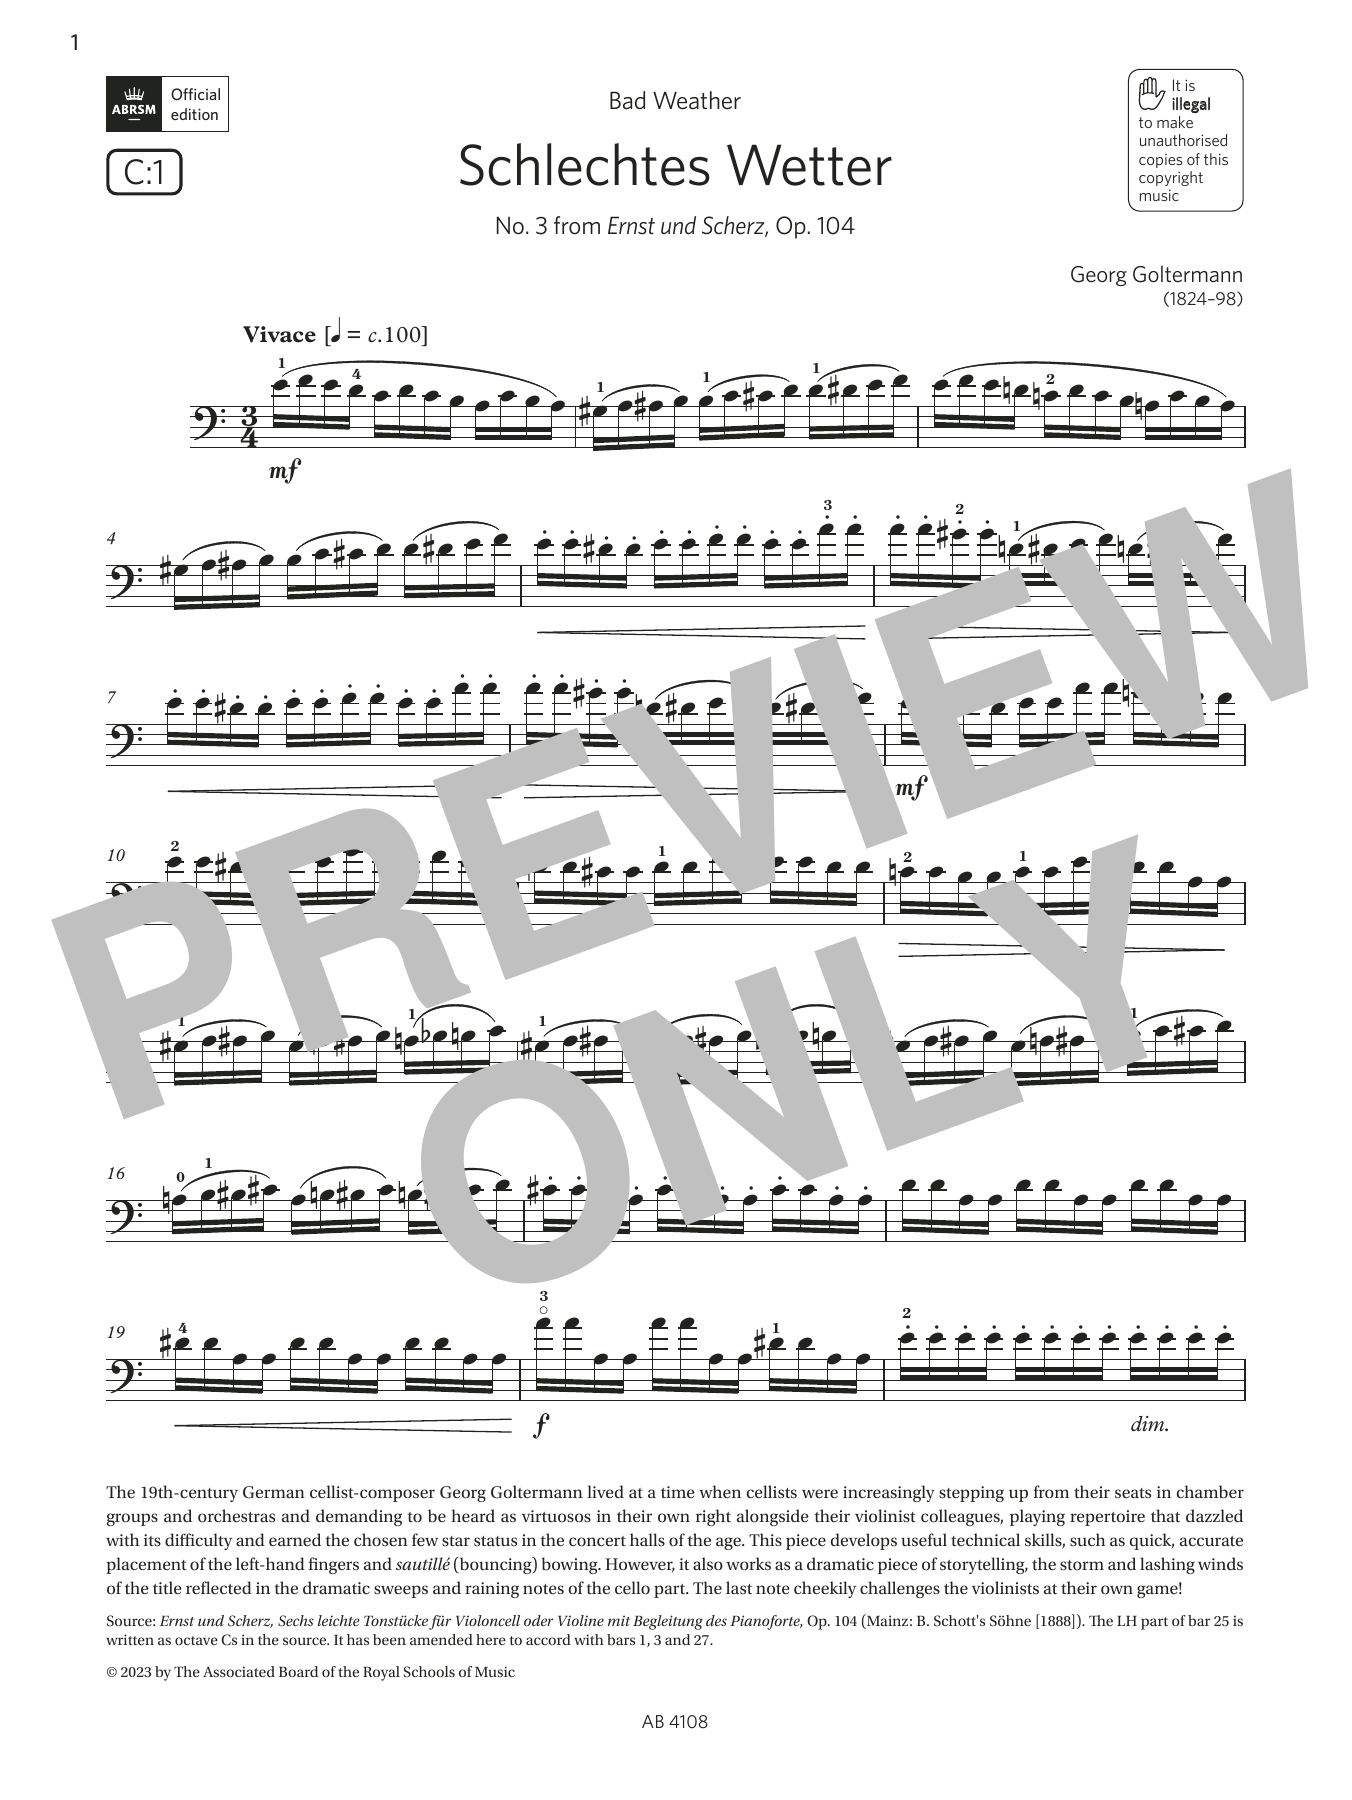 Download Georg Goltermann Schlechtes Wetter (Grade 5, C1, from th Sheet Music